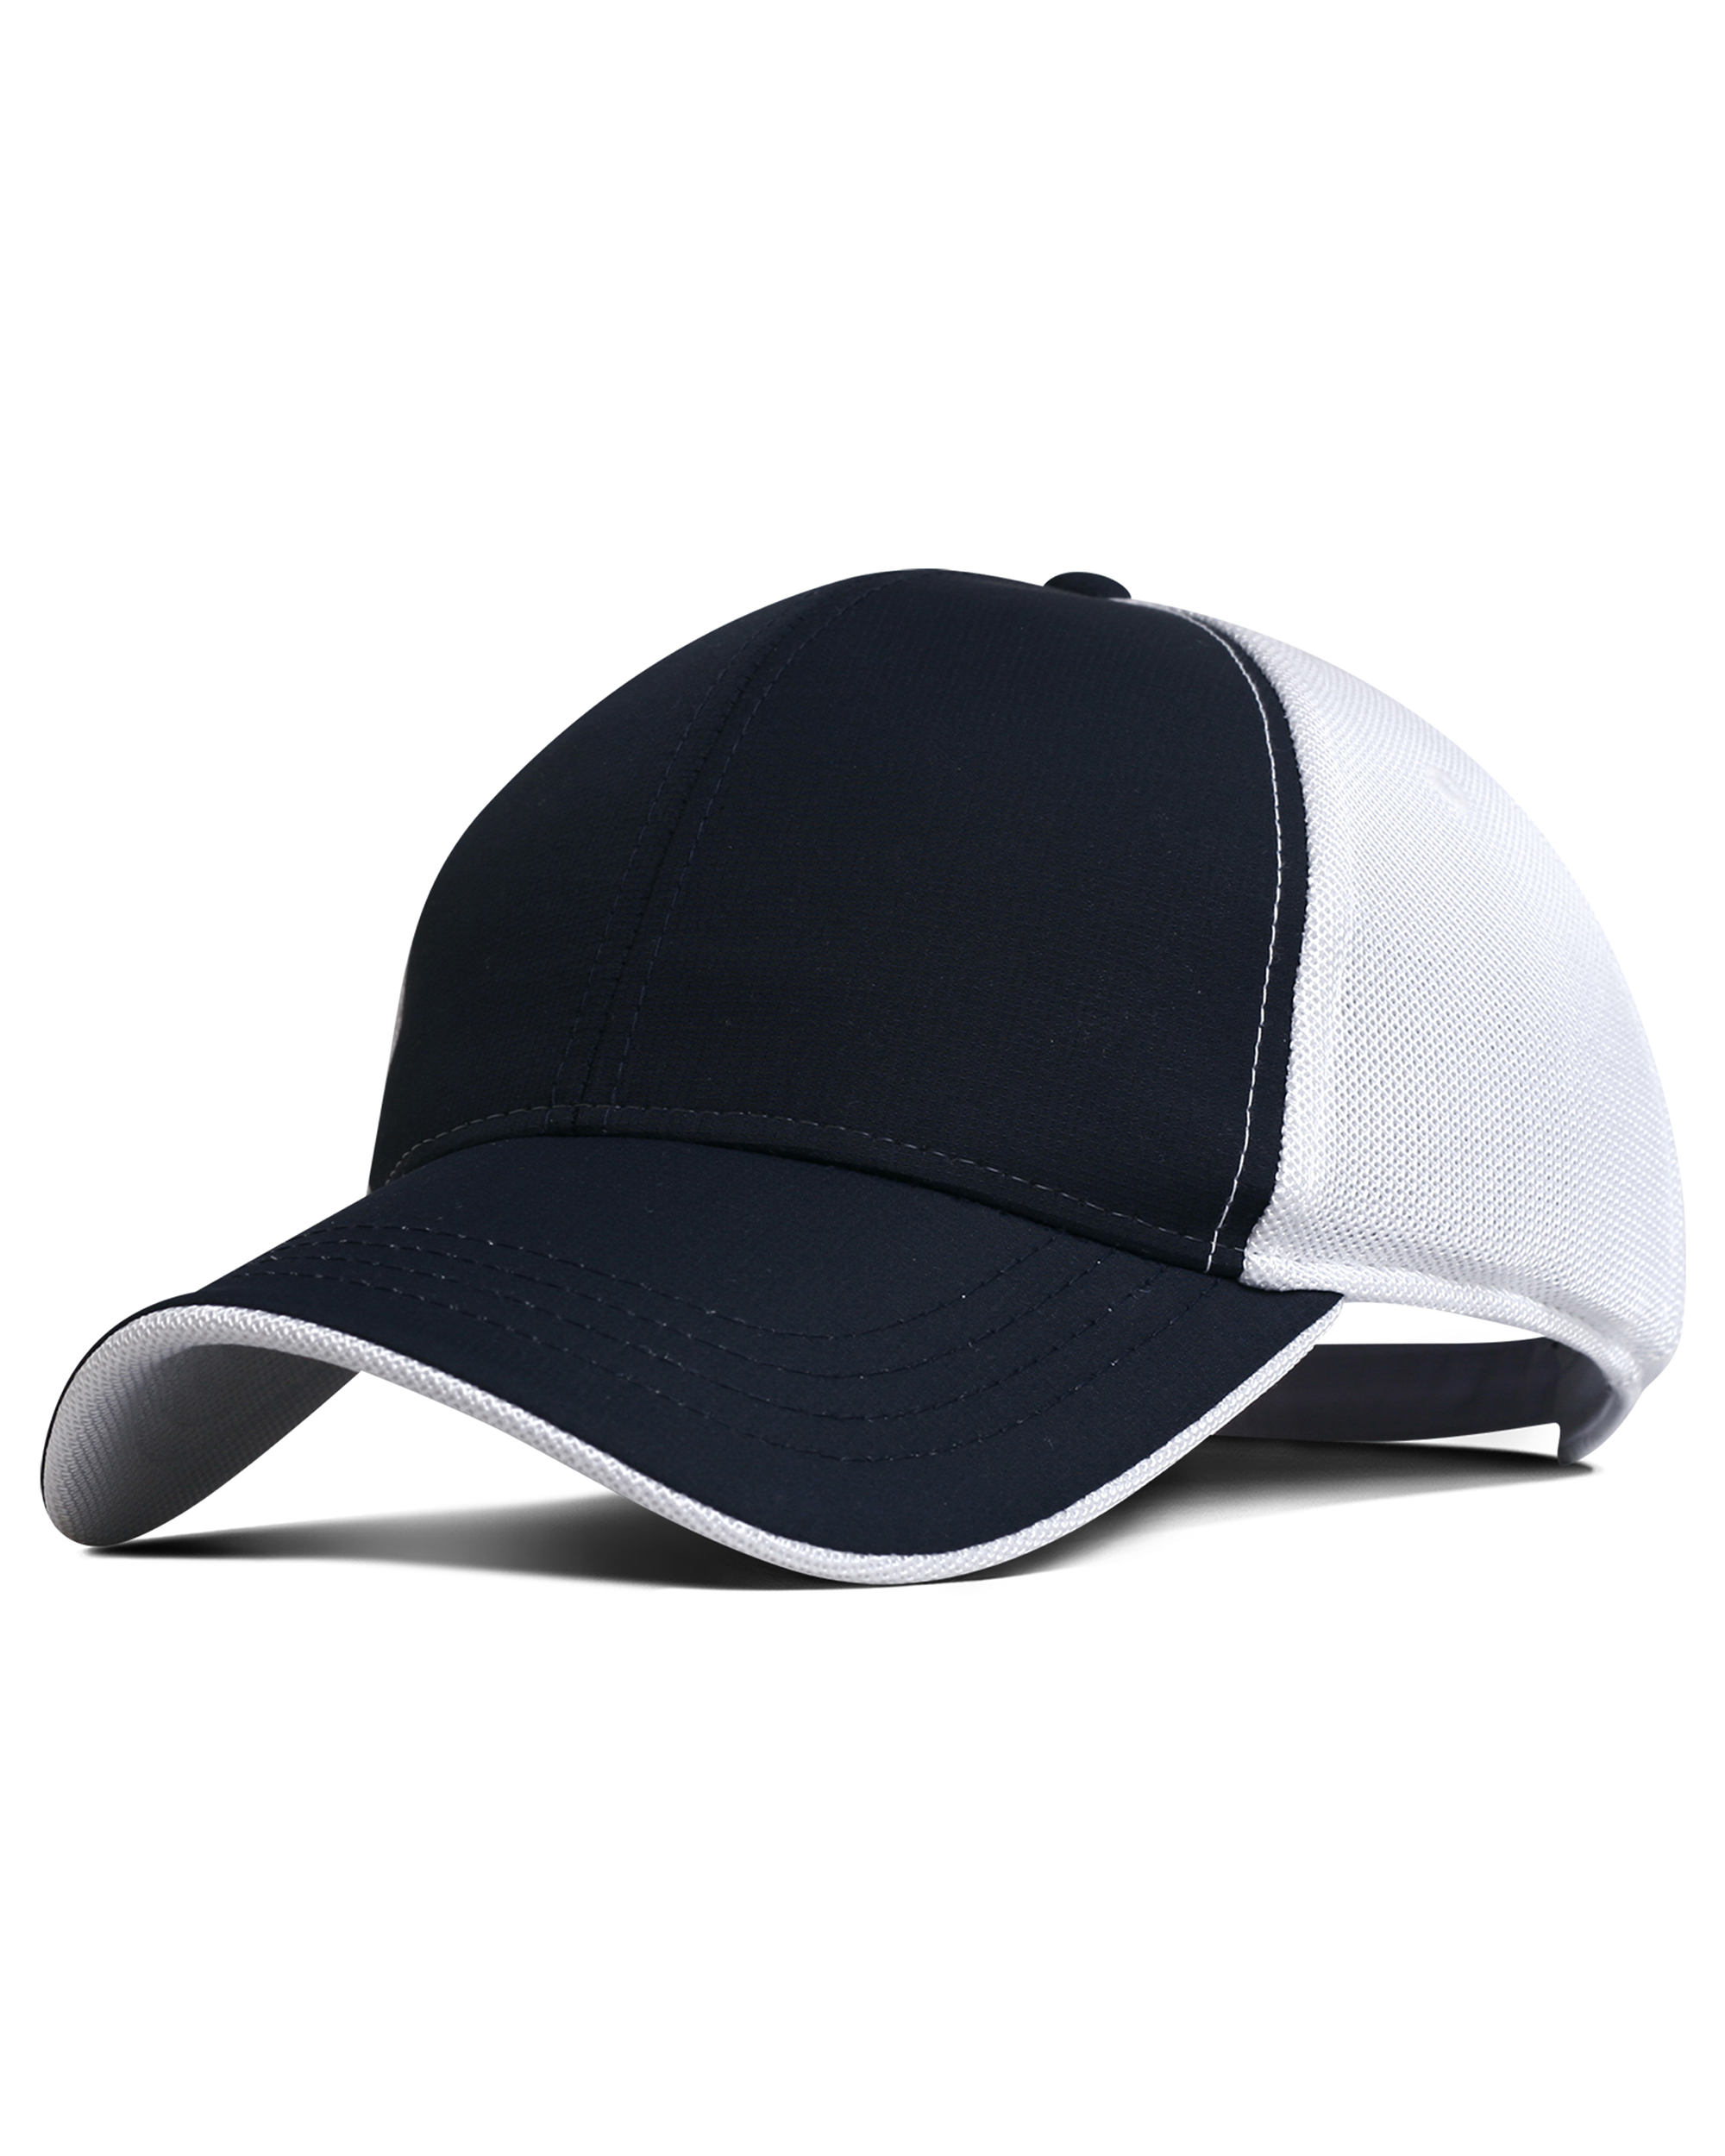 Fahrenheit® F366 Performance Pearl Nylon Mesh Back Hat